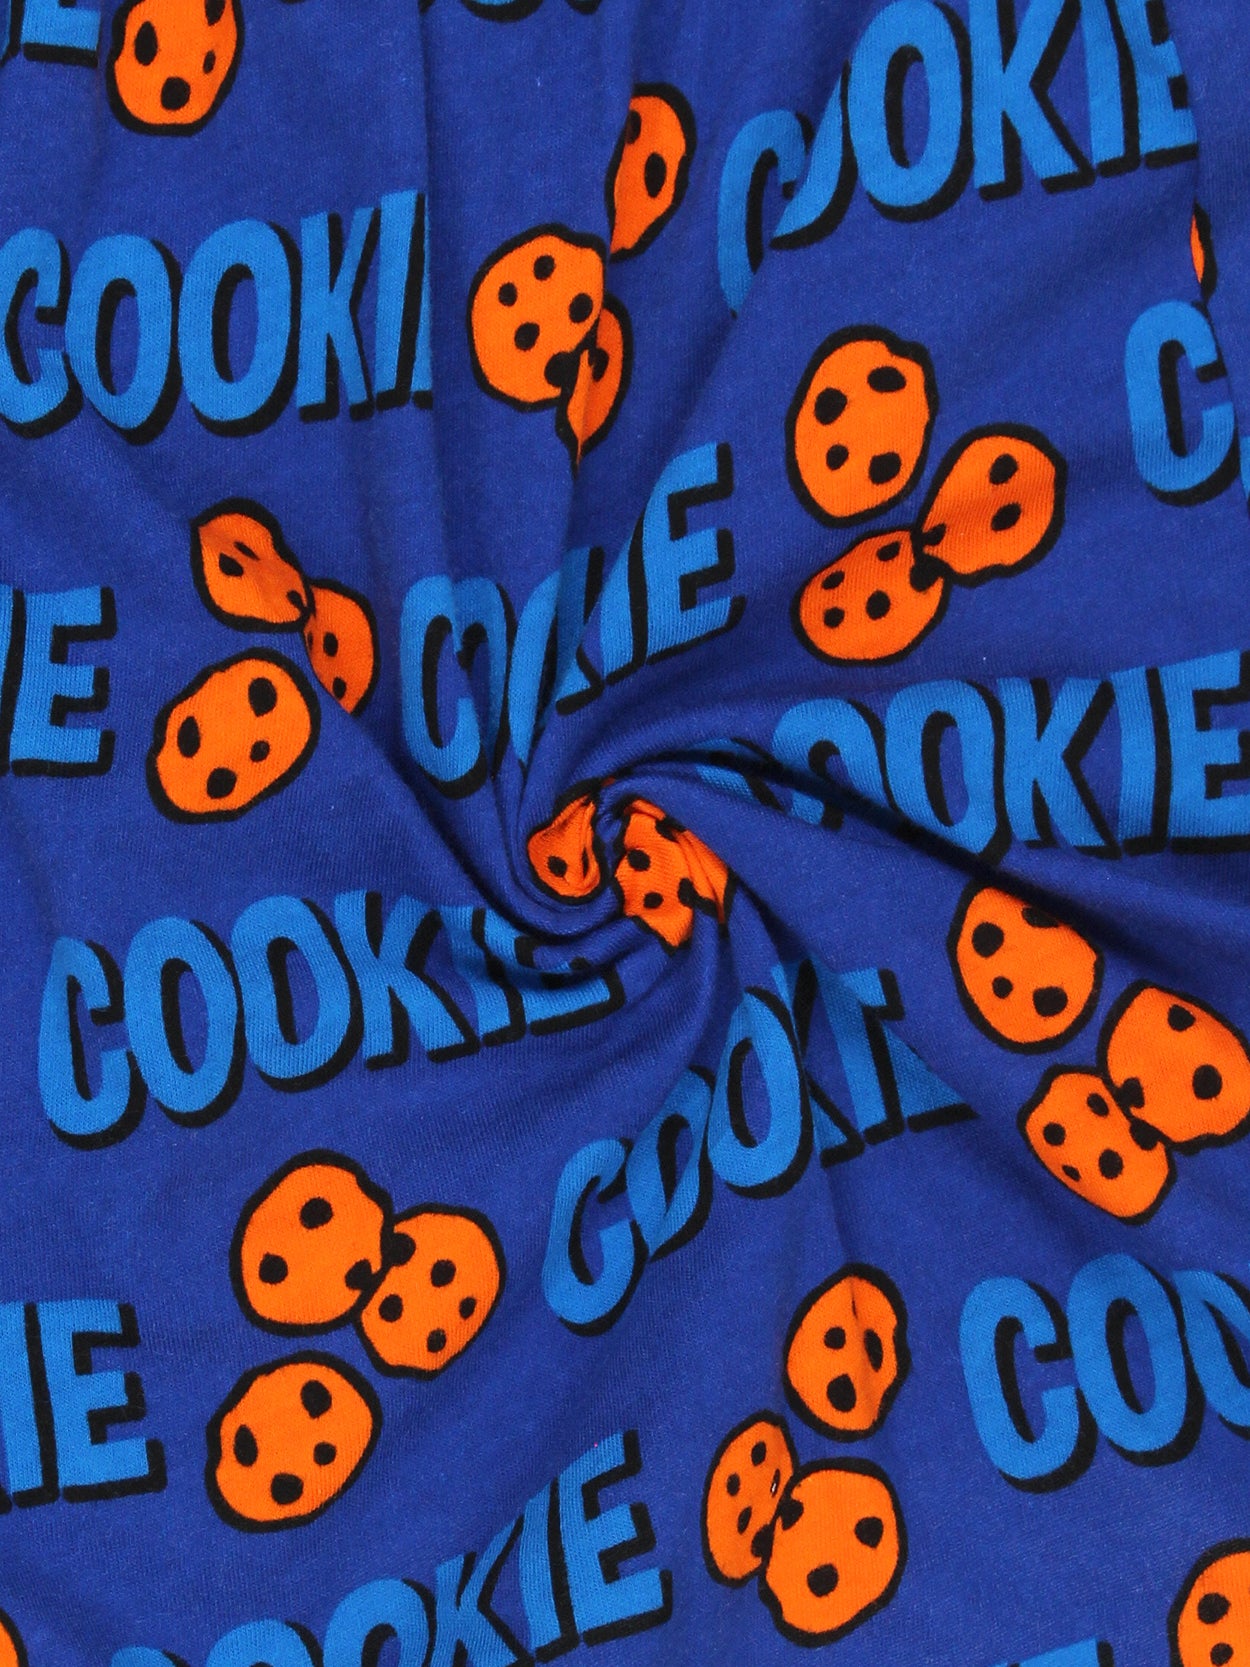 Sesame Street Underwear, Mens Boxer Shorts Cookie Monster Blue